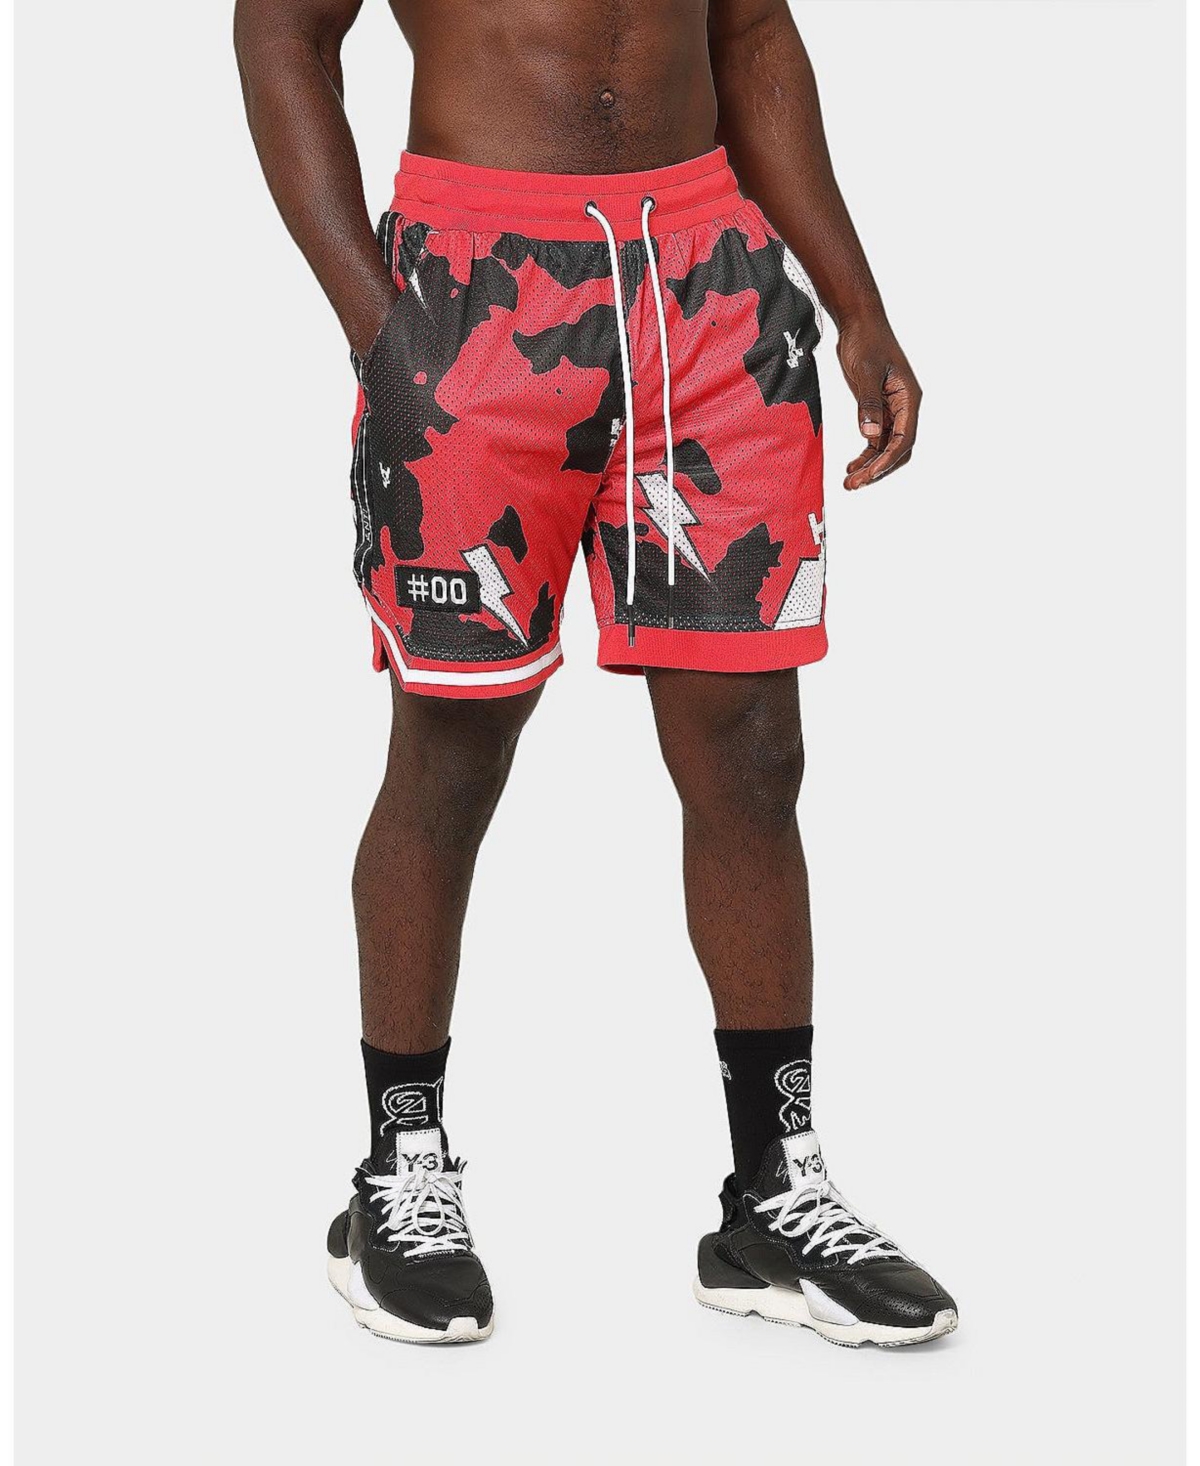 Men's Storm Camo Basketball Shorts - Black/red/white